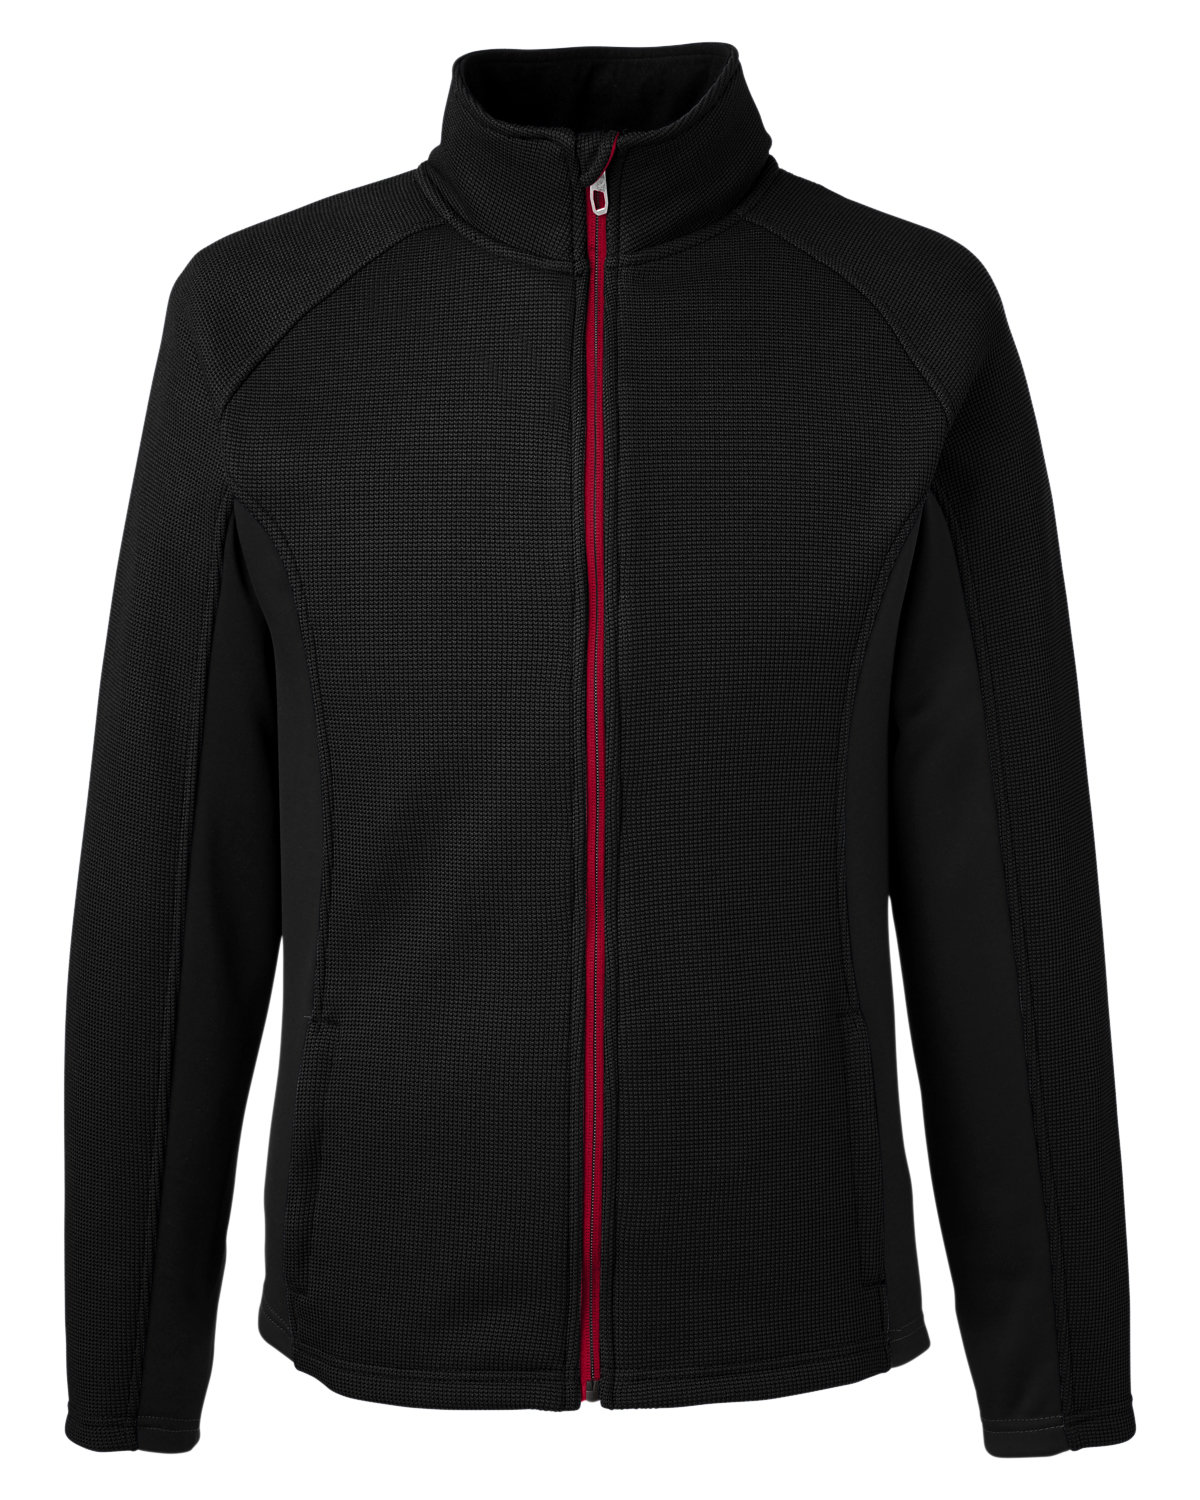 Spyder Mens Foremost Full Zip Fleece Jacket (Black)